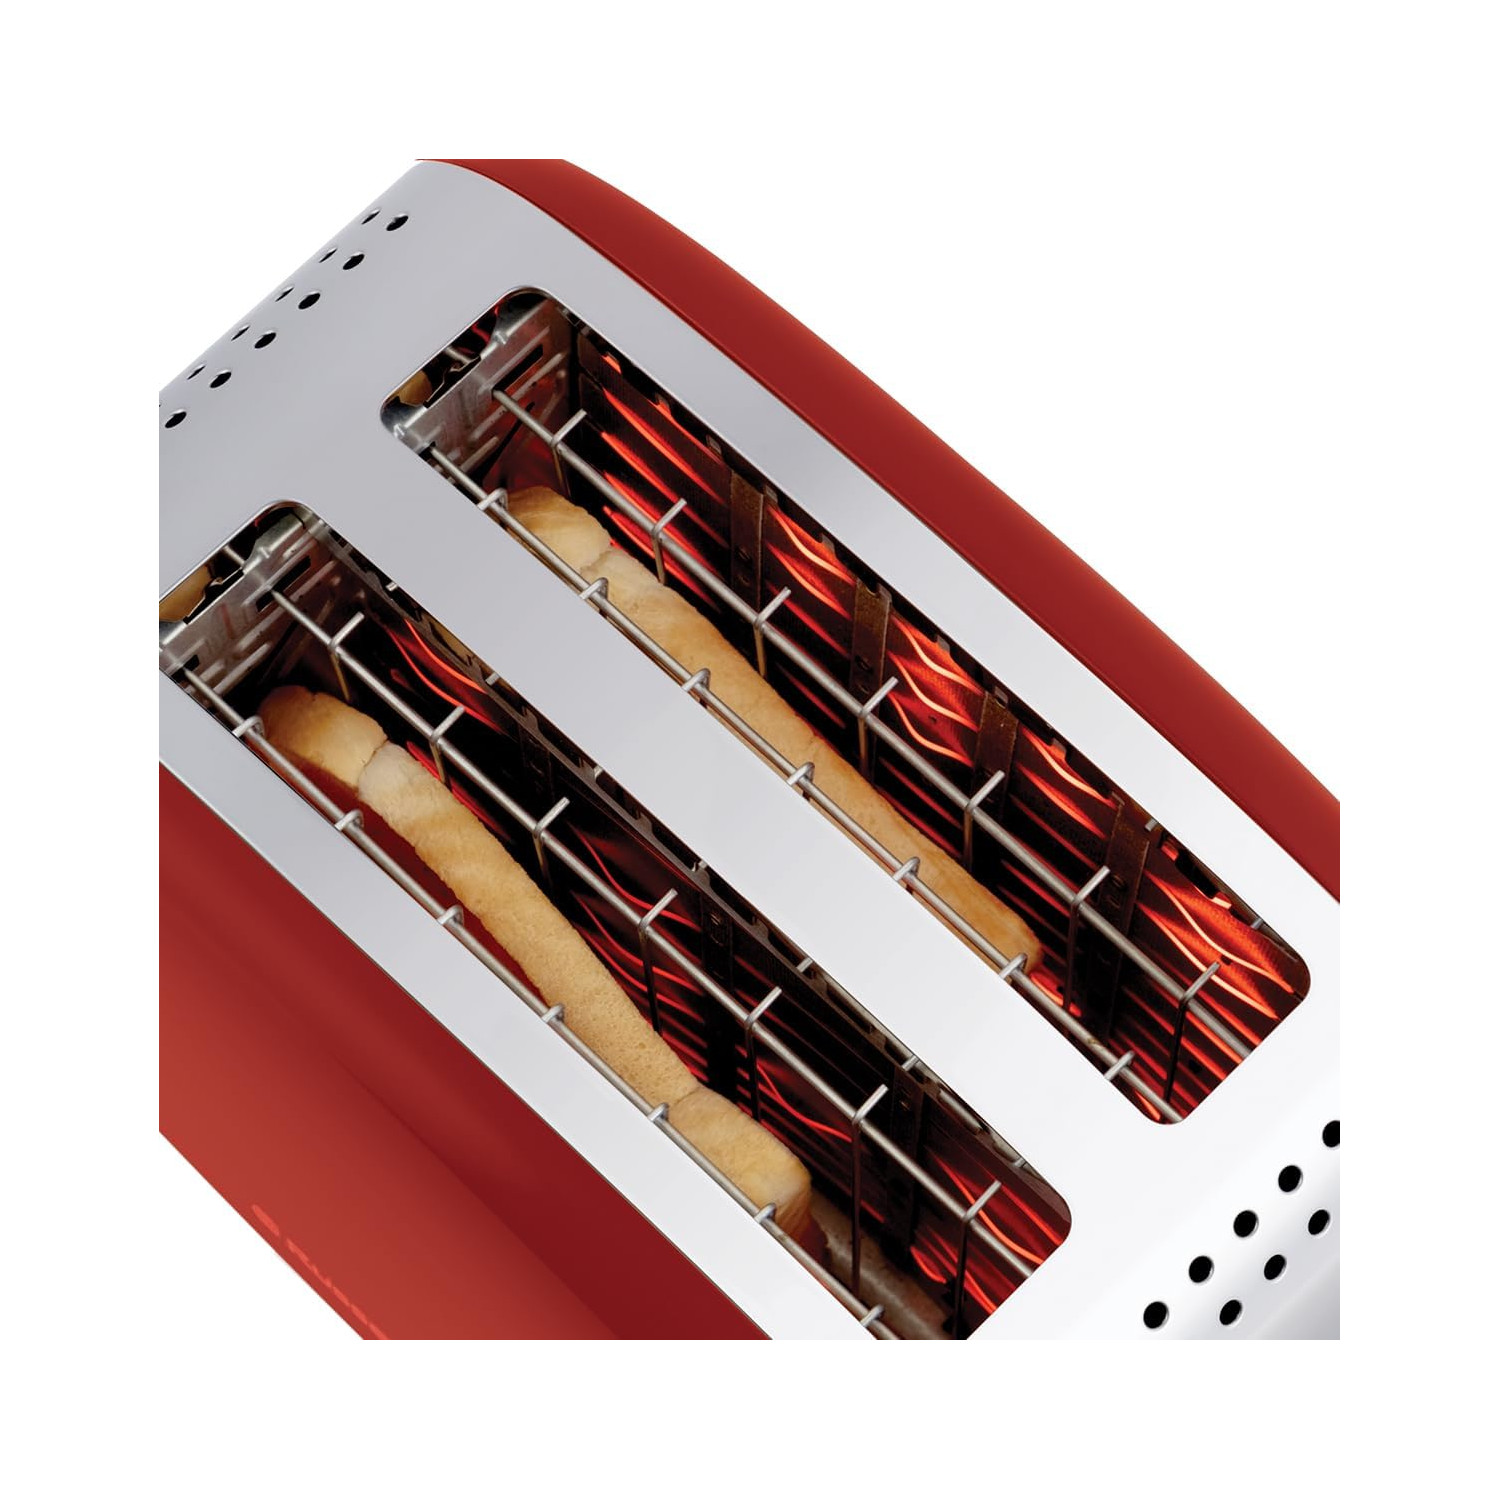 Watt, HOBBS Colours 2) 26554-56 Plus Rot Rot Toaster (1600 Schlitze: RUSSELL